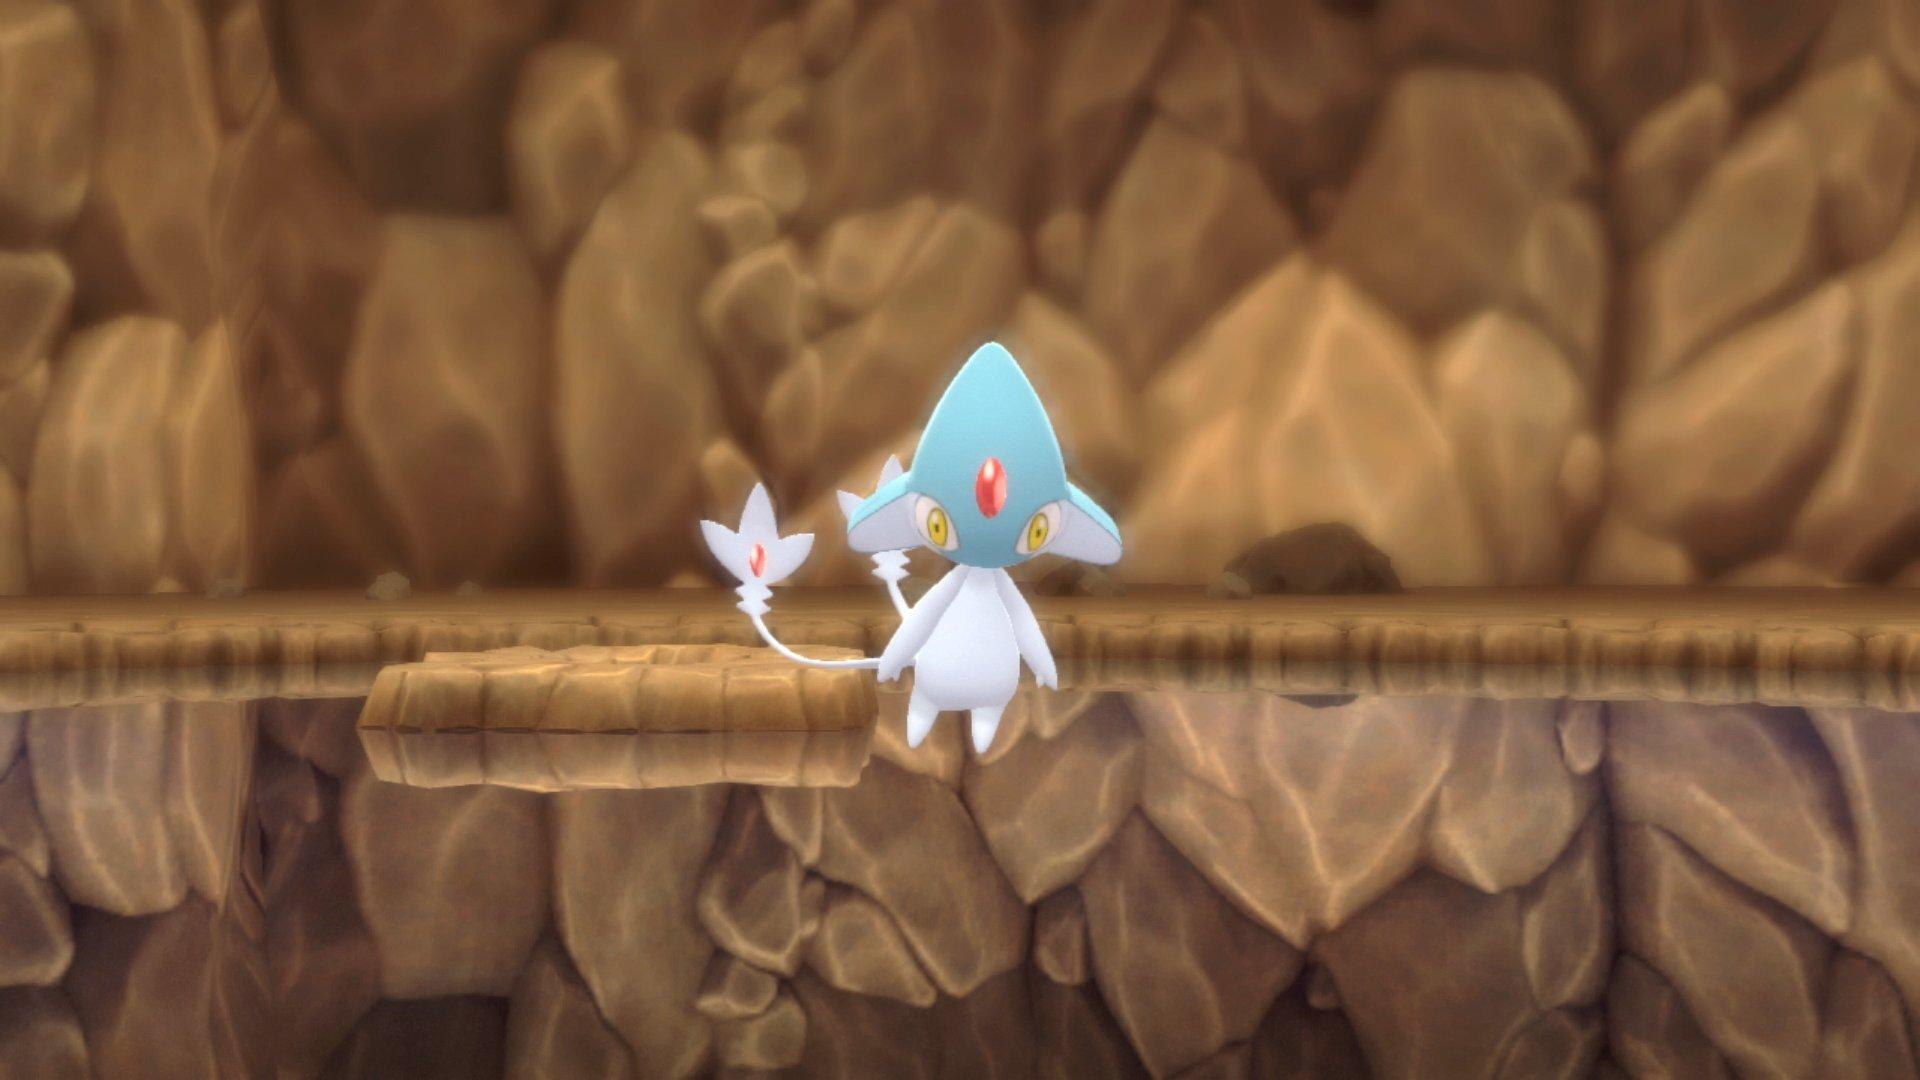 Pokemon Brilliant Diamond & Shining Pearl: Best Nature for Dialga and Palkia